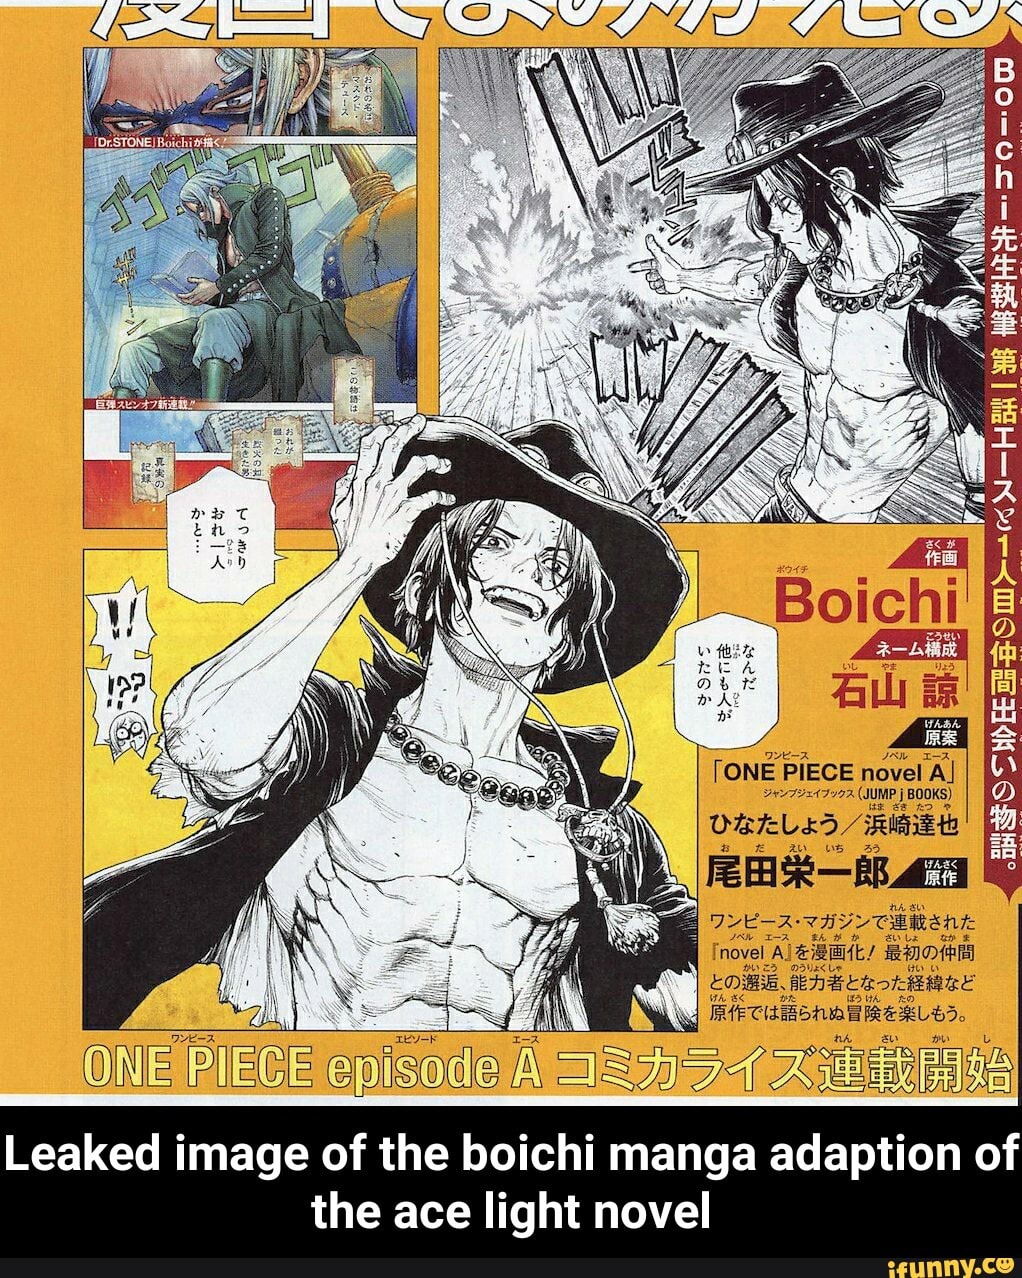 One Piece Novel One Piece Episode A Leaked Image Of The Boichi Manga Adaption Of The Ace Light Novel Leaked Image Of The Boichi Manga Adaption Of The Ace Light Novel